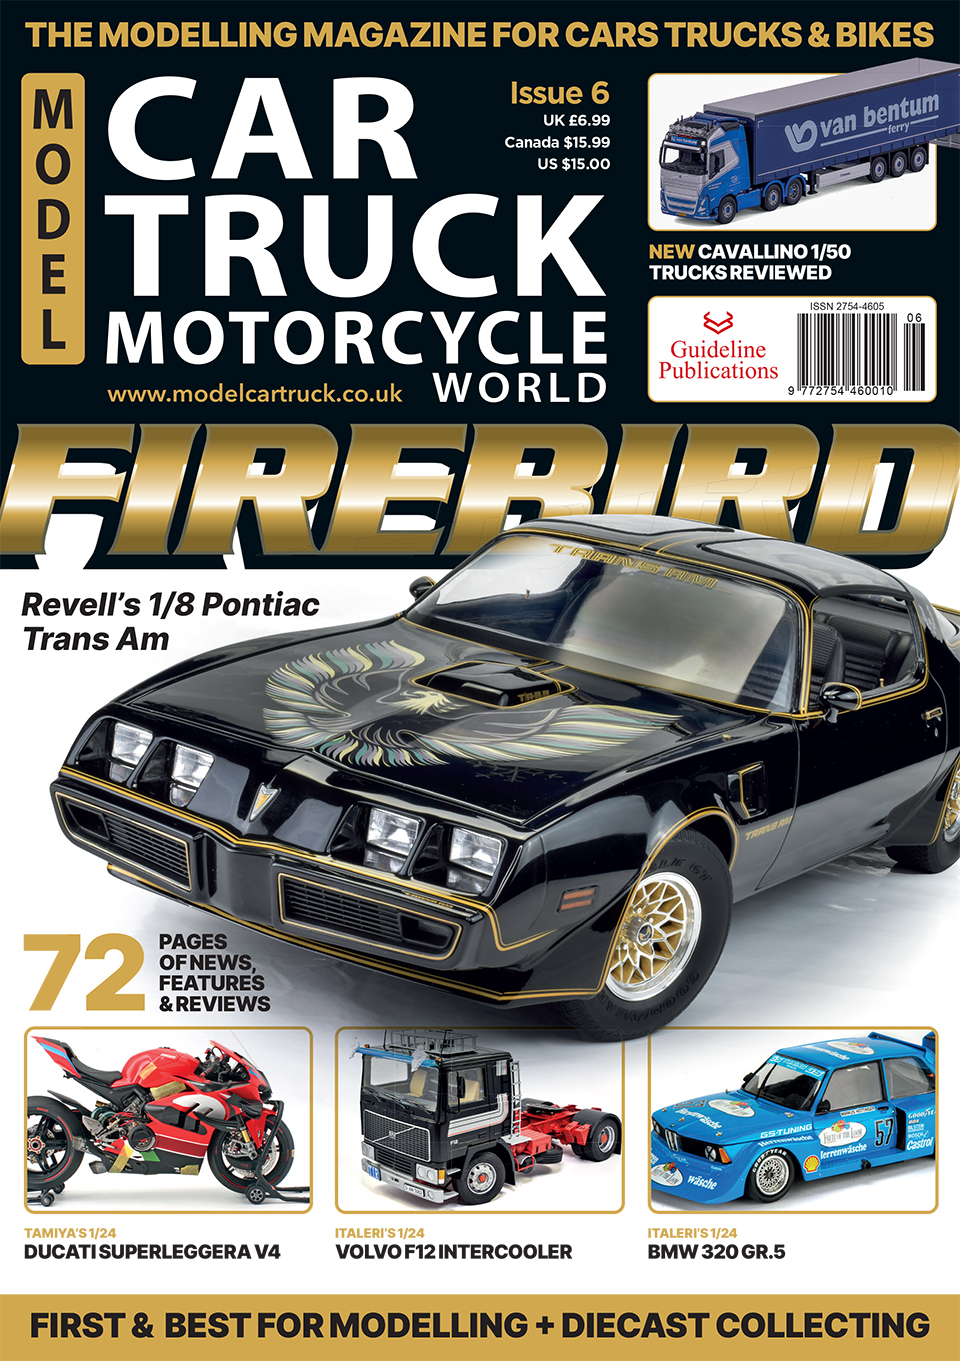 Guideline Publications Ltd Model Car Truck Motorcycle World no 6 